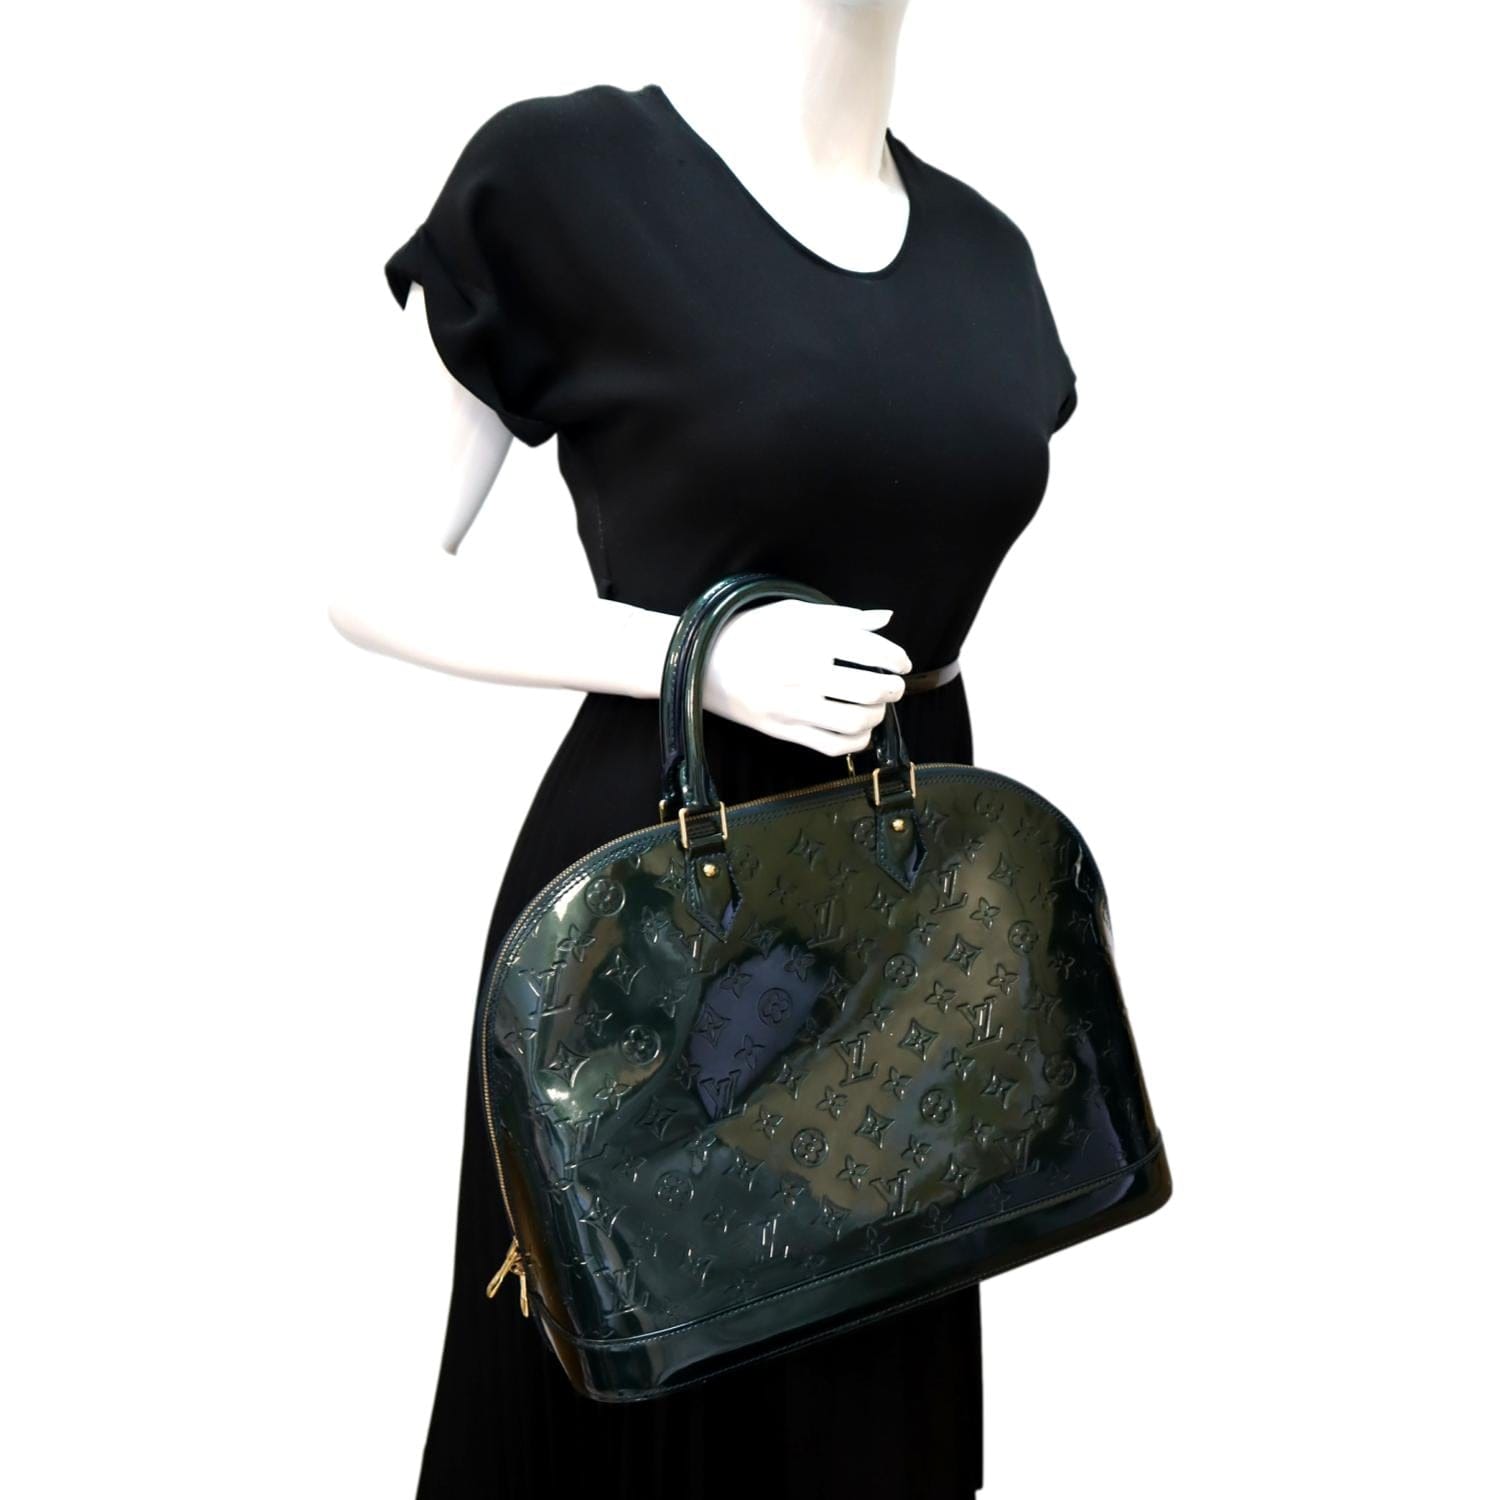 monogram vernis leather handbags